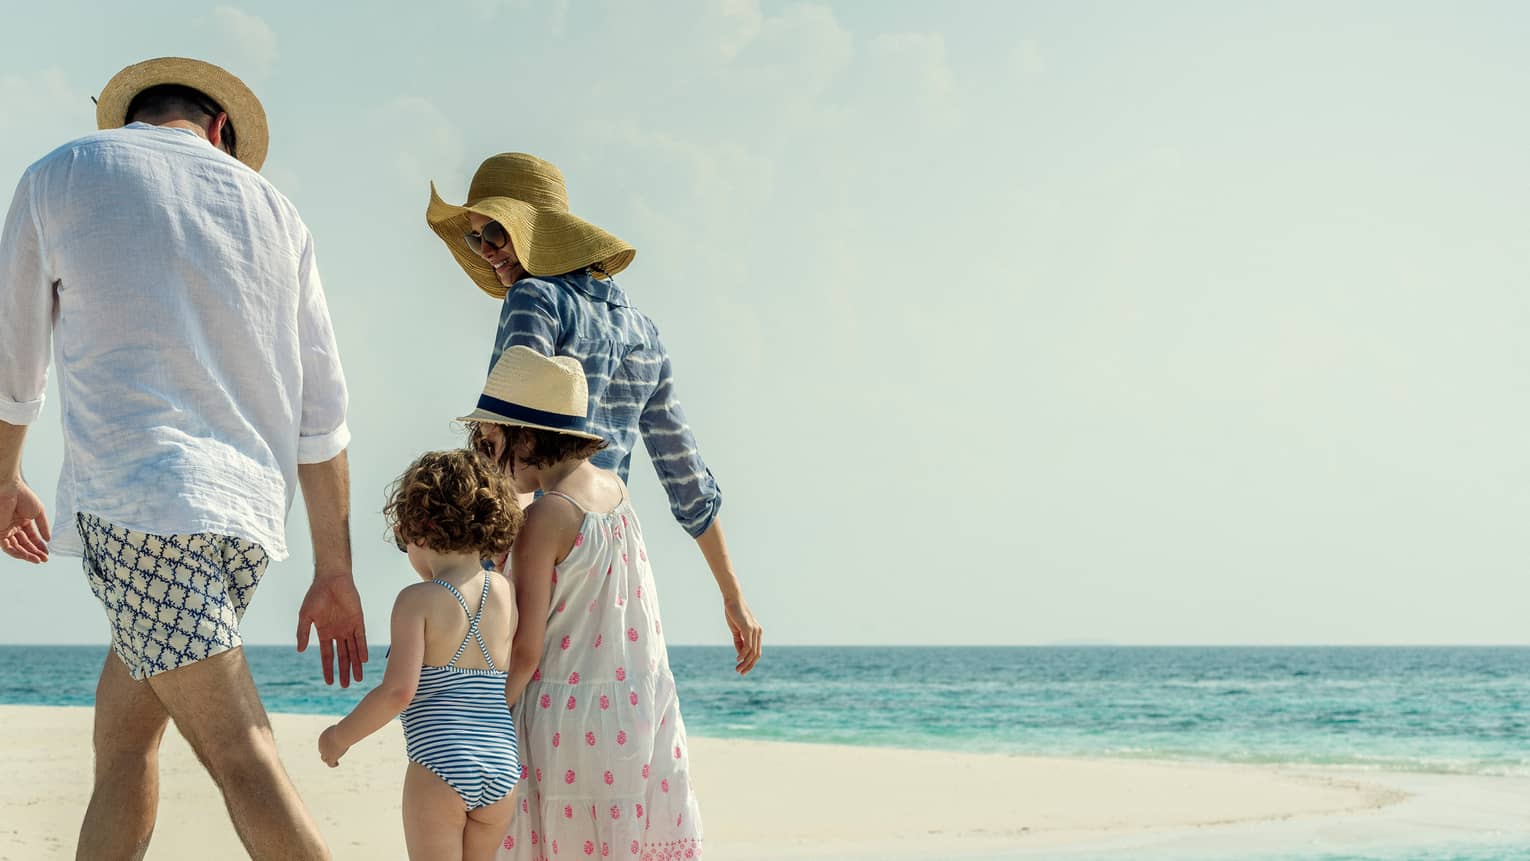 Family wearing swimsuits, sundresses and sun hats walk along white sand beach